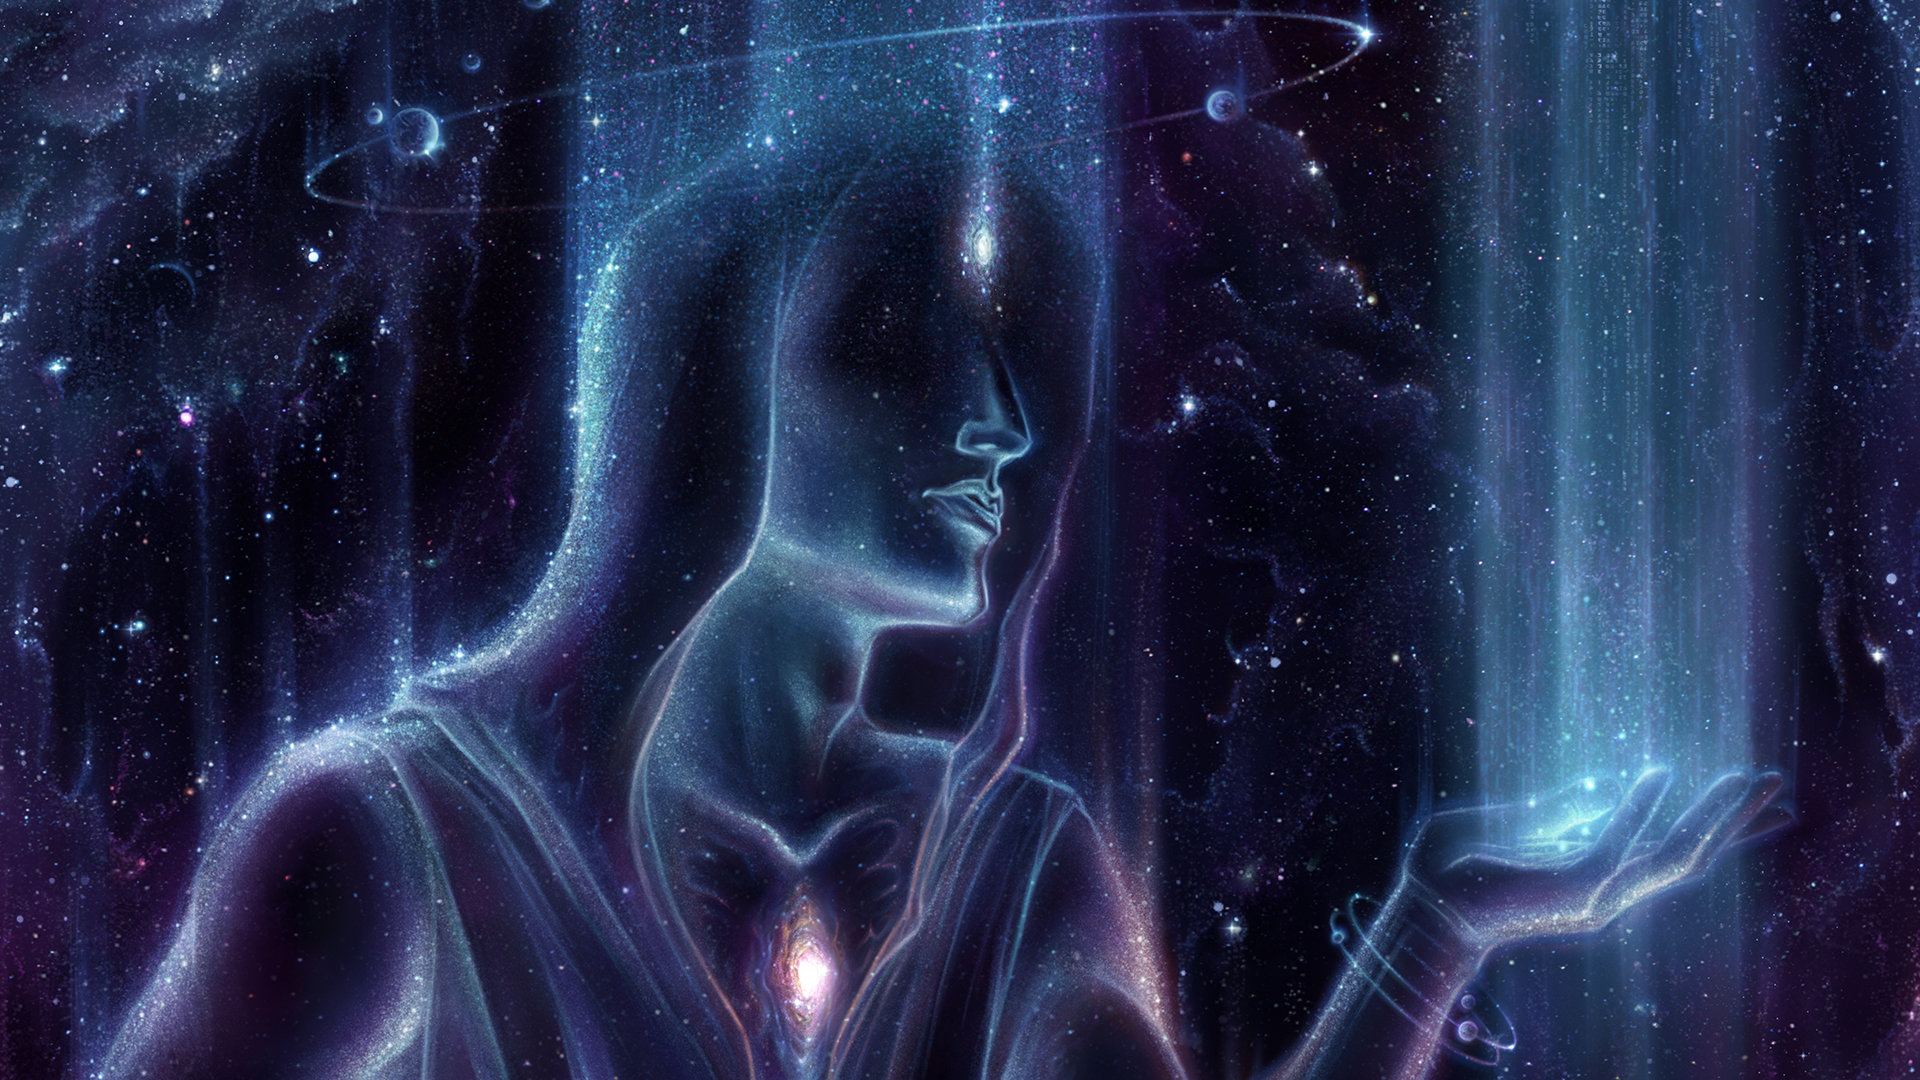 Digital Painting 2D Space Art Fantasy Art Universe Spiritual Enlightenment Sickick Music 1920x1080